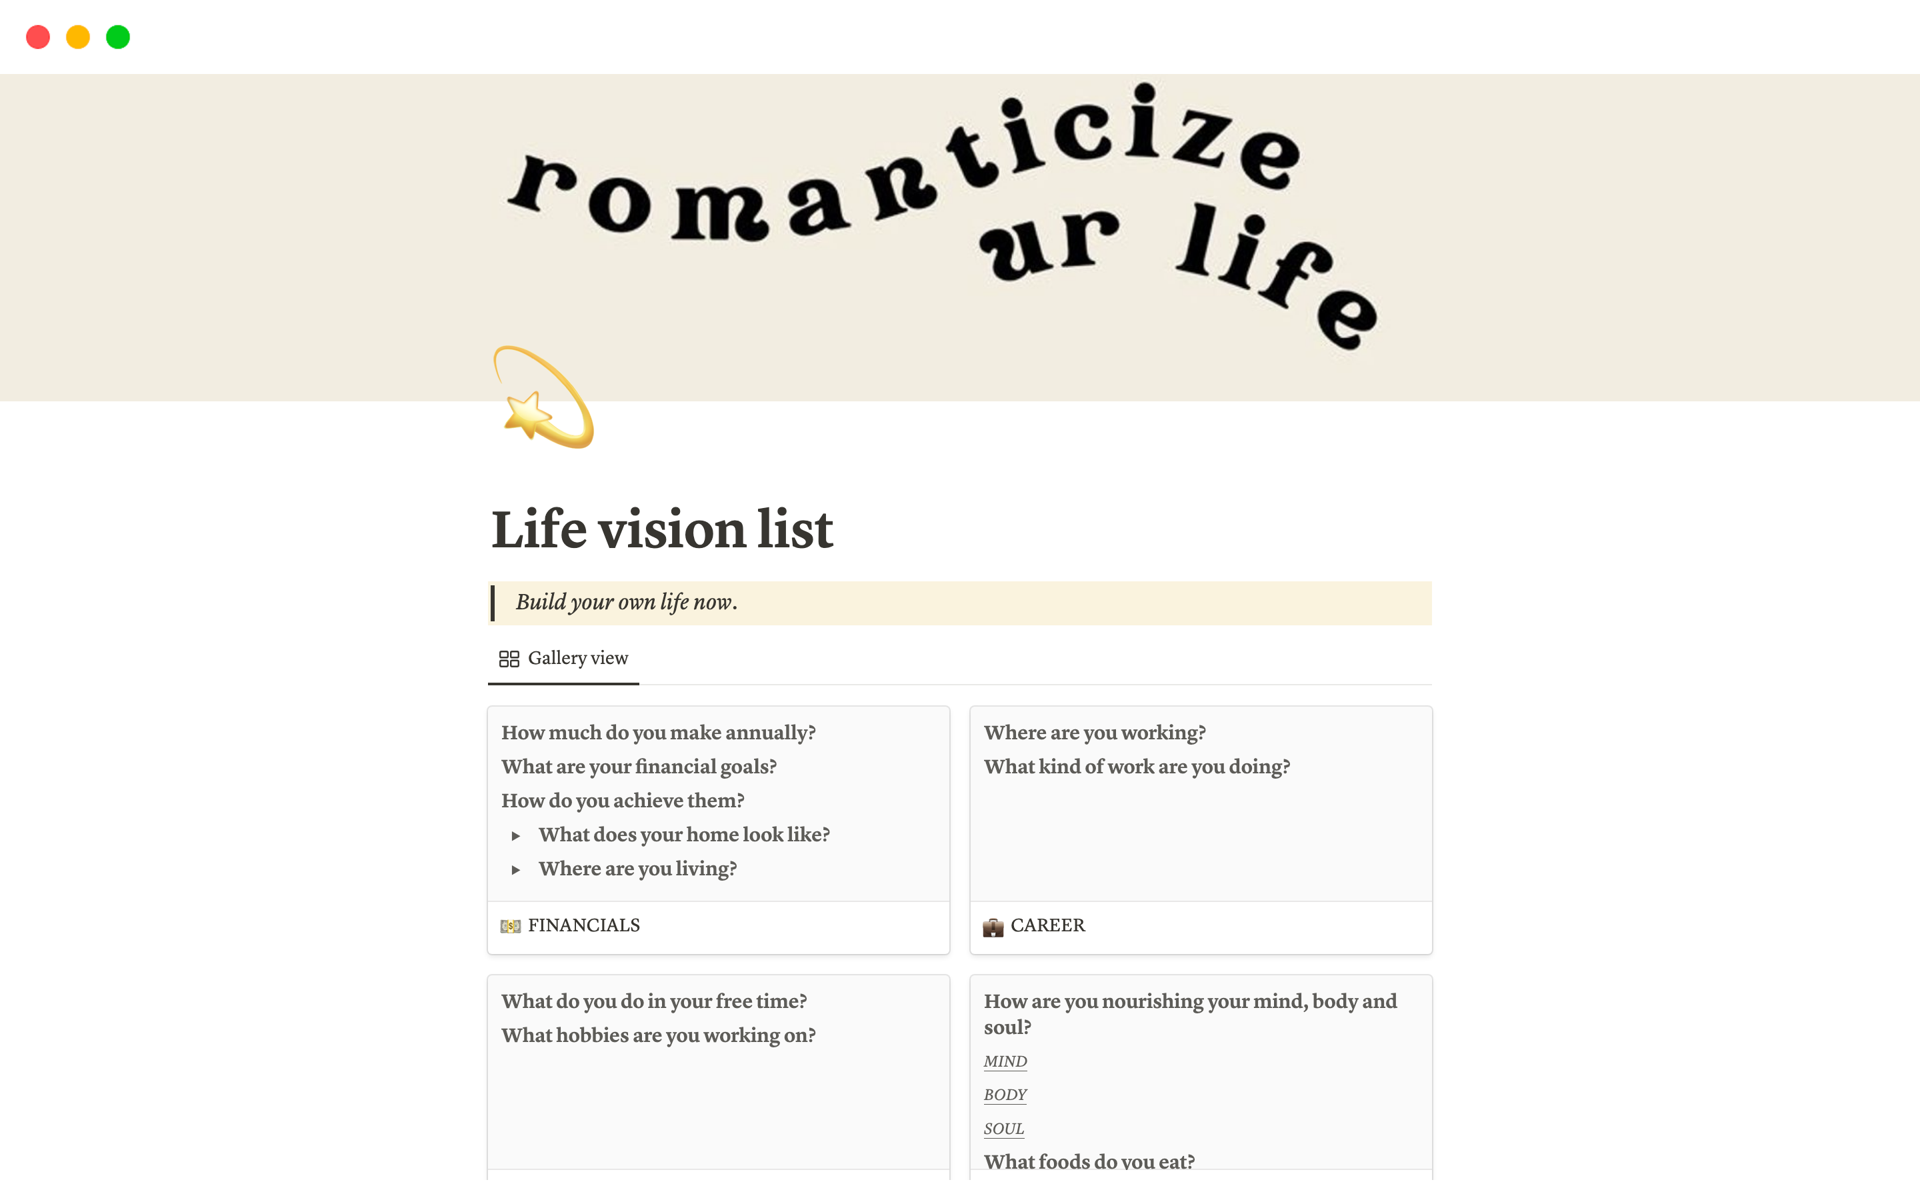 Vista previa de una plantilla para Life vision list